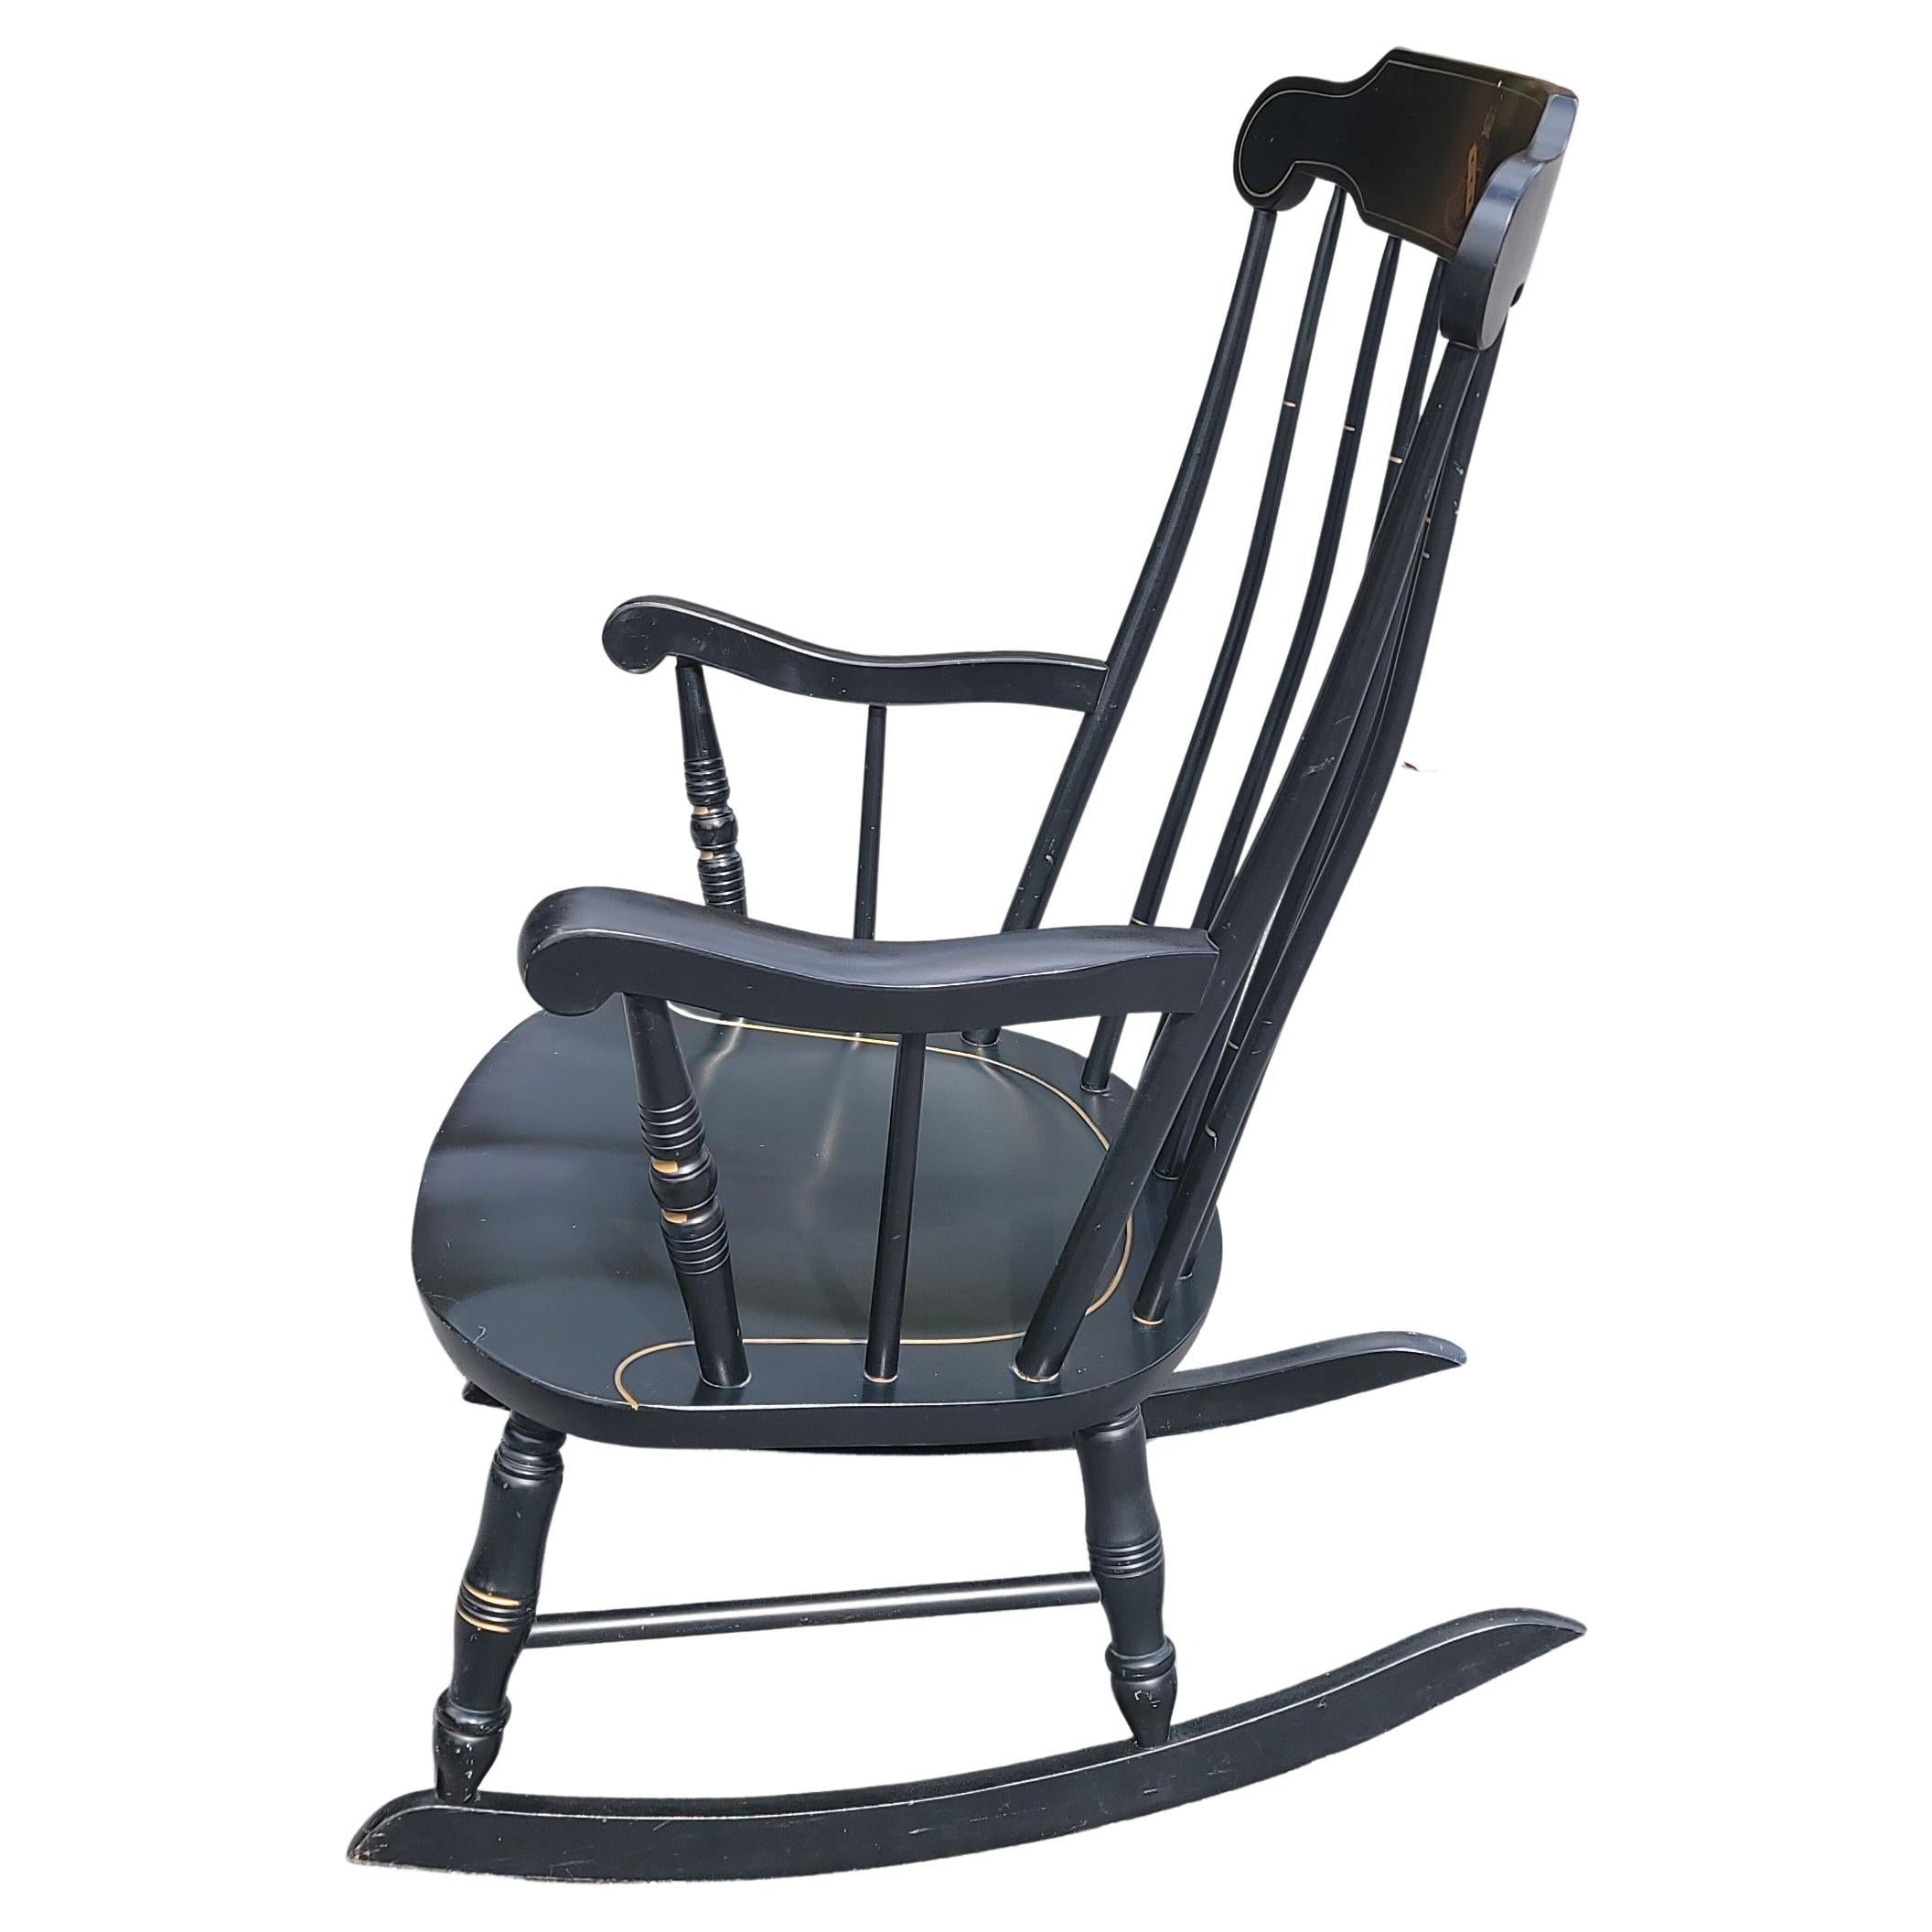 s. bent & bros rocking chair value